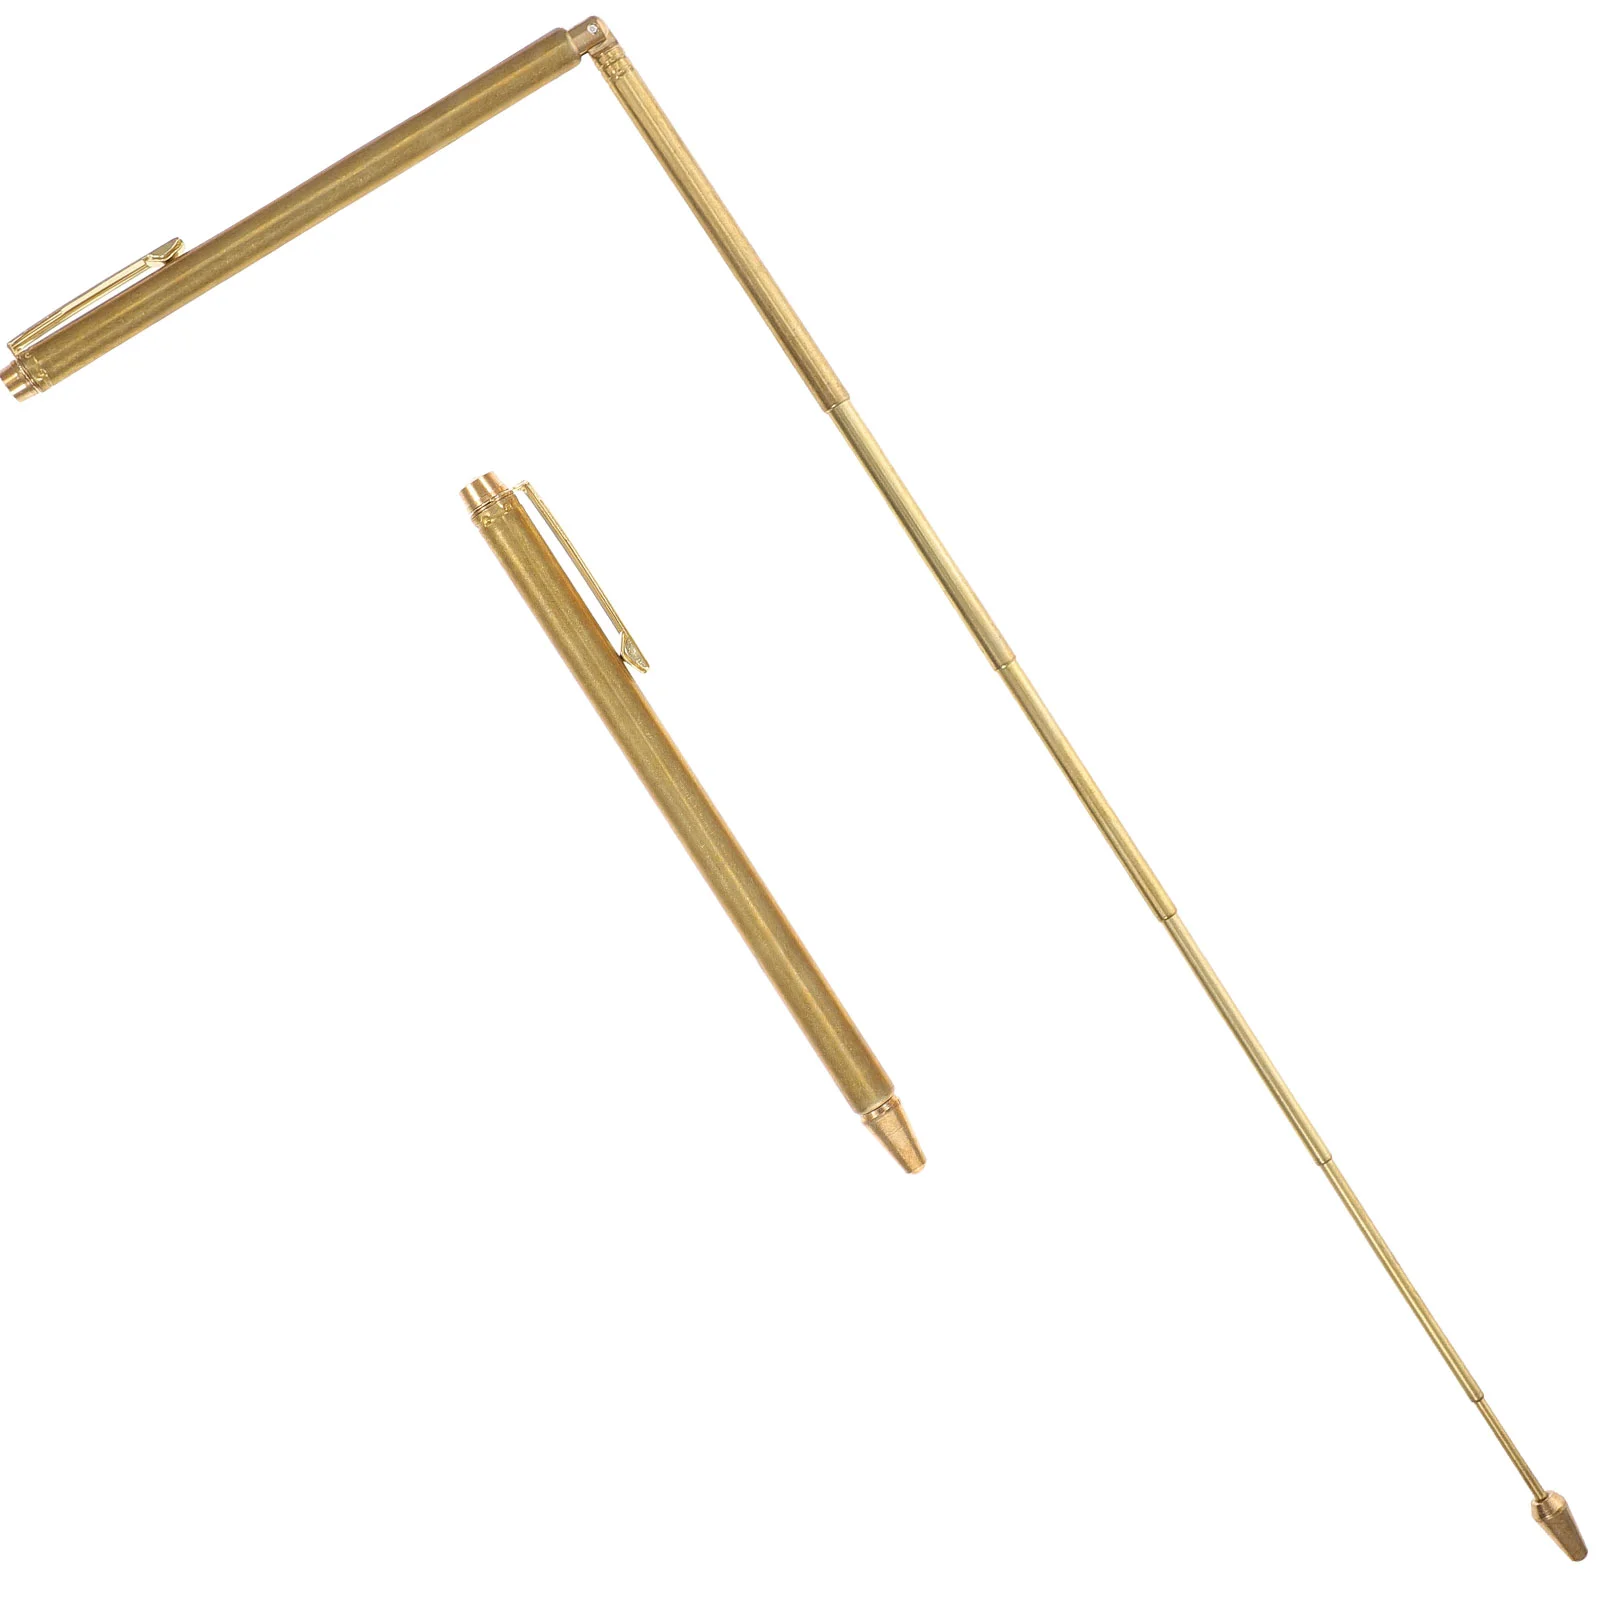 

2 Pcs Telescoping Probing Rod Dowsing Rods The Golden Compass Portable Long Copper Probe Divining Brass